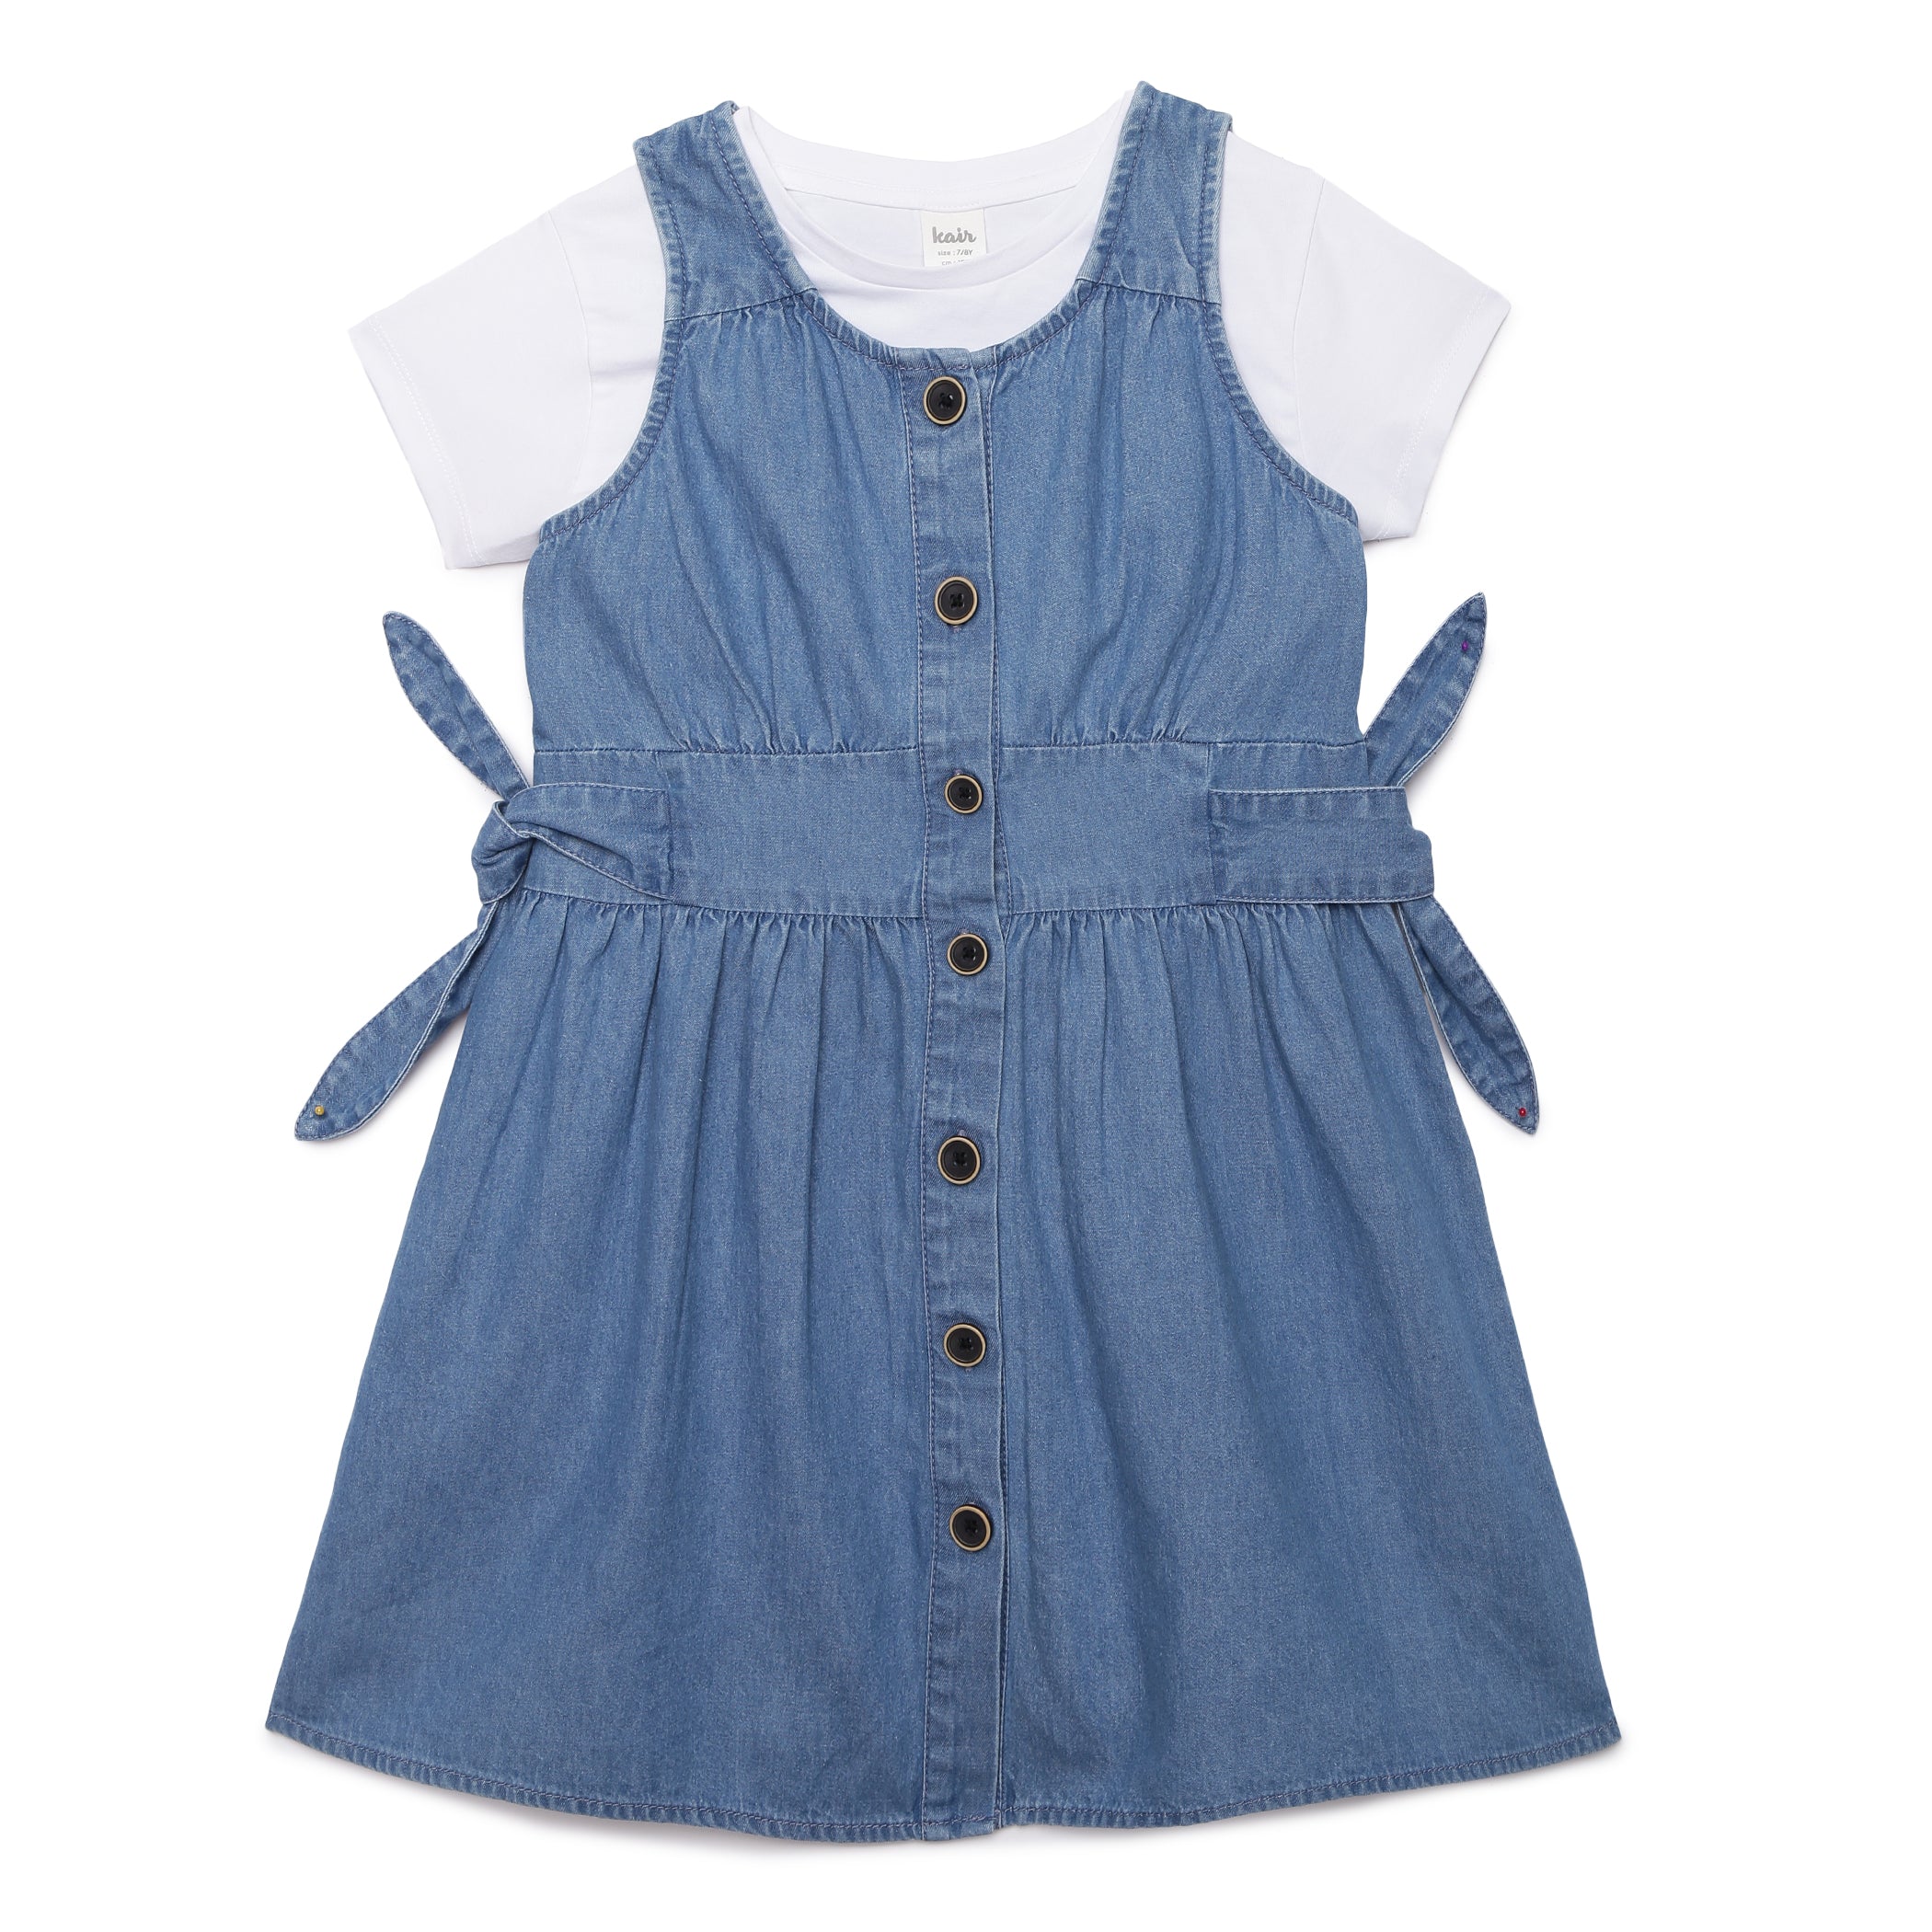 2Pcs Kids Baby Girls Outfits Short Sleeve T-shirt Tops + Denim Jeans Pants  Set | eBay